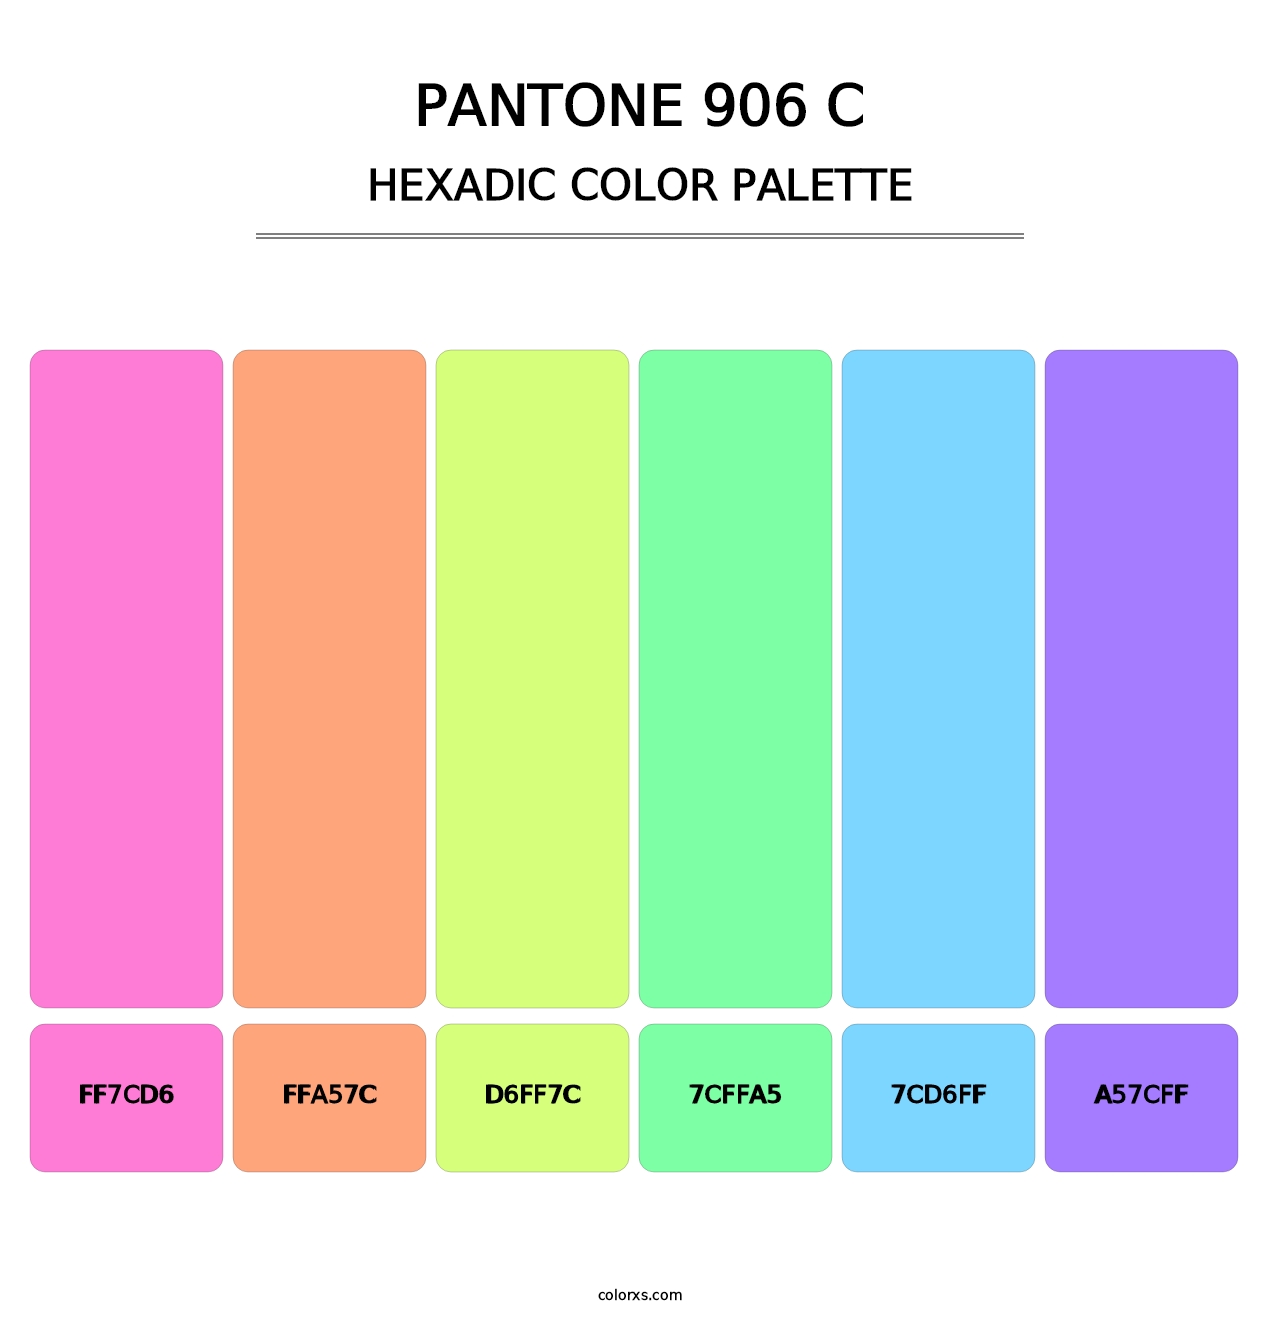 PANTONE 906 C - Hexadic Color Palette